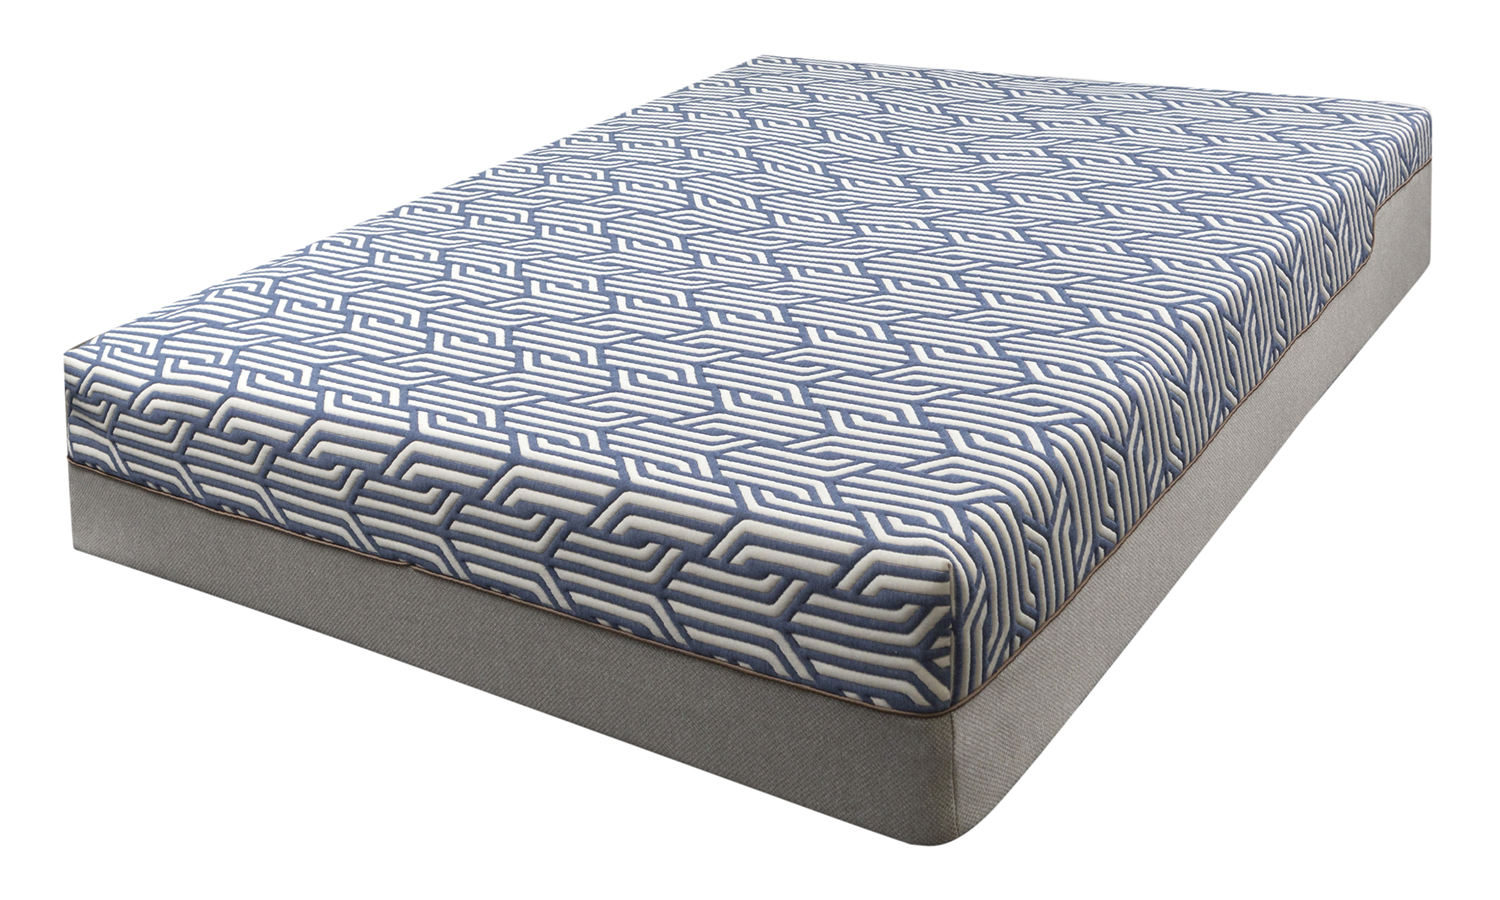 cool mattress pad covers